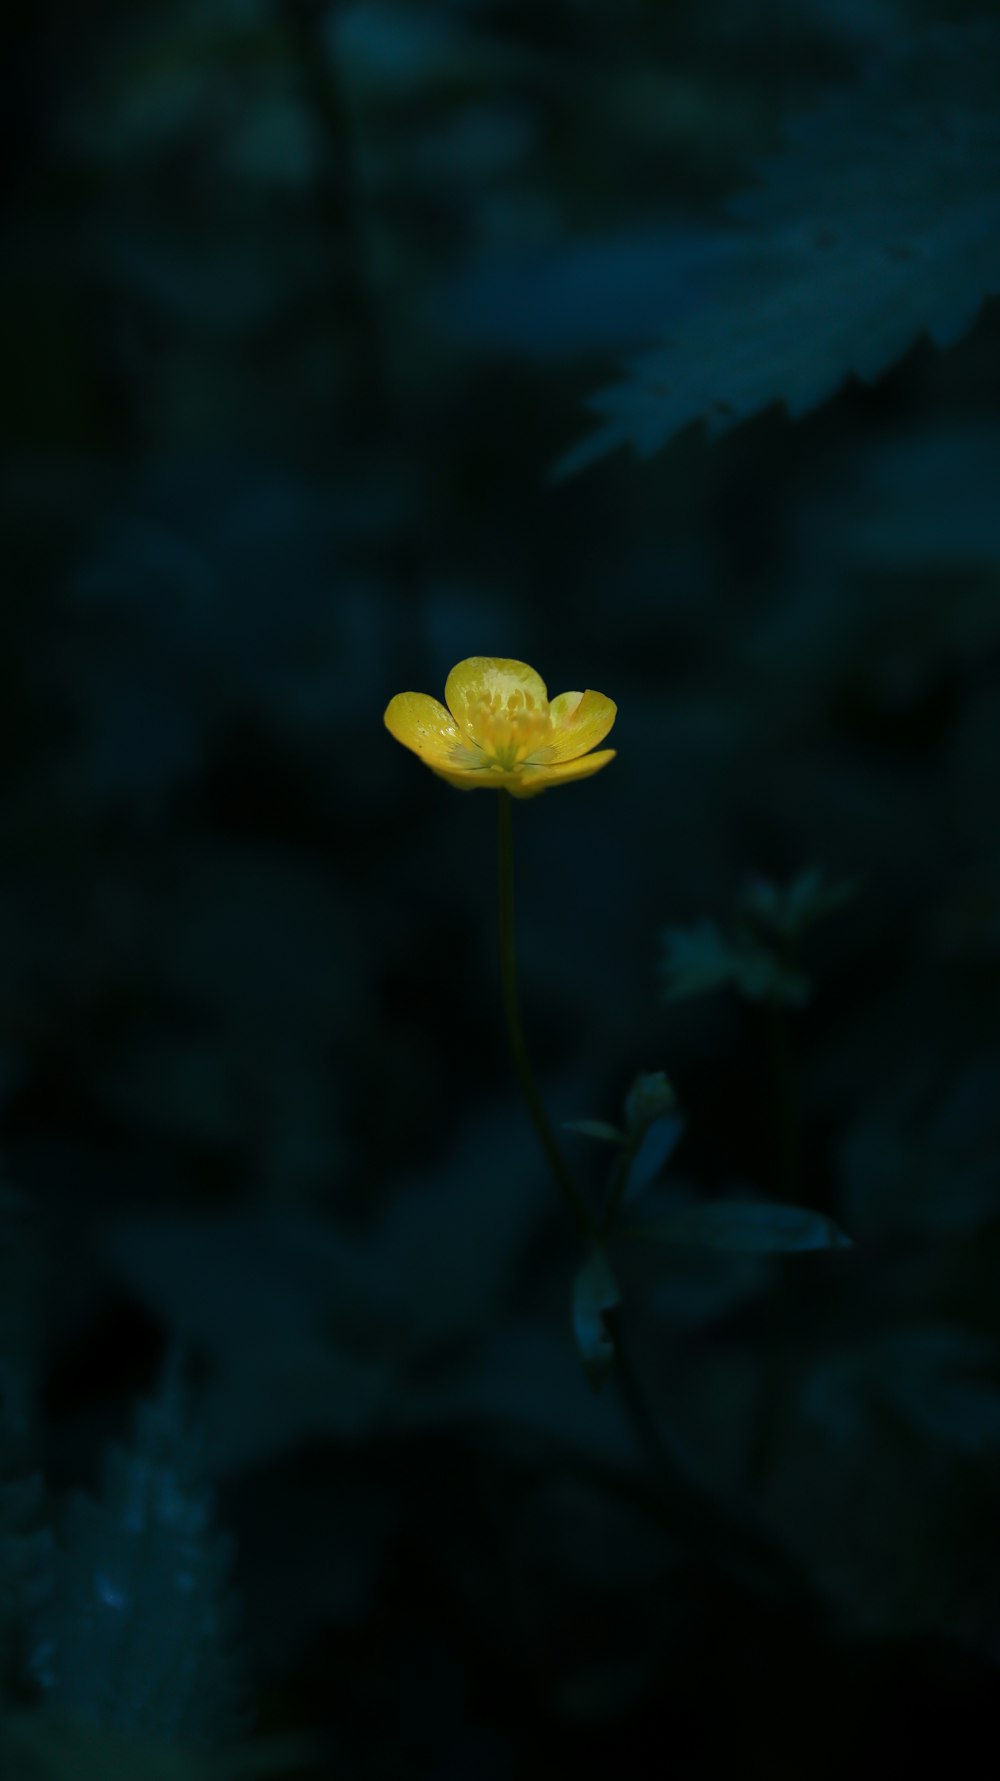 un singolo fiore giallo nel buio